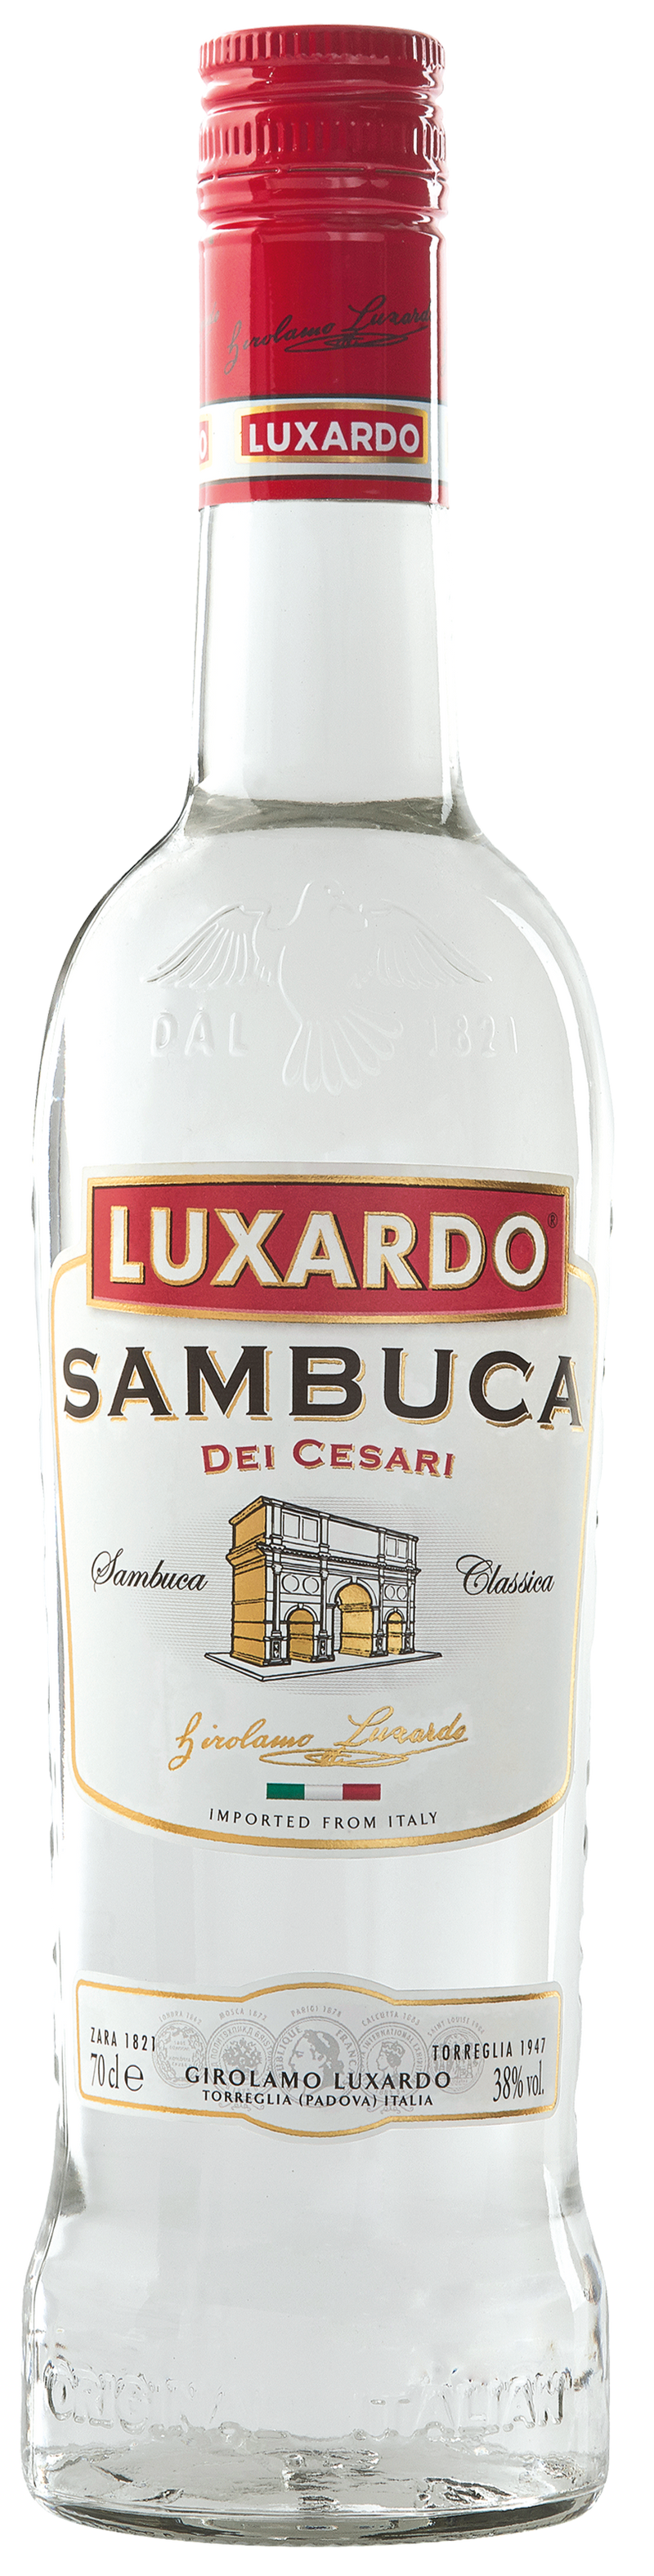 Luxardo Sambuca Dei Cesari 70cl